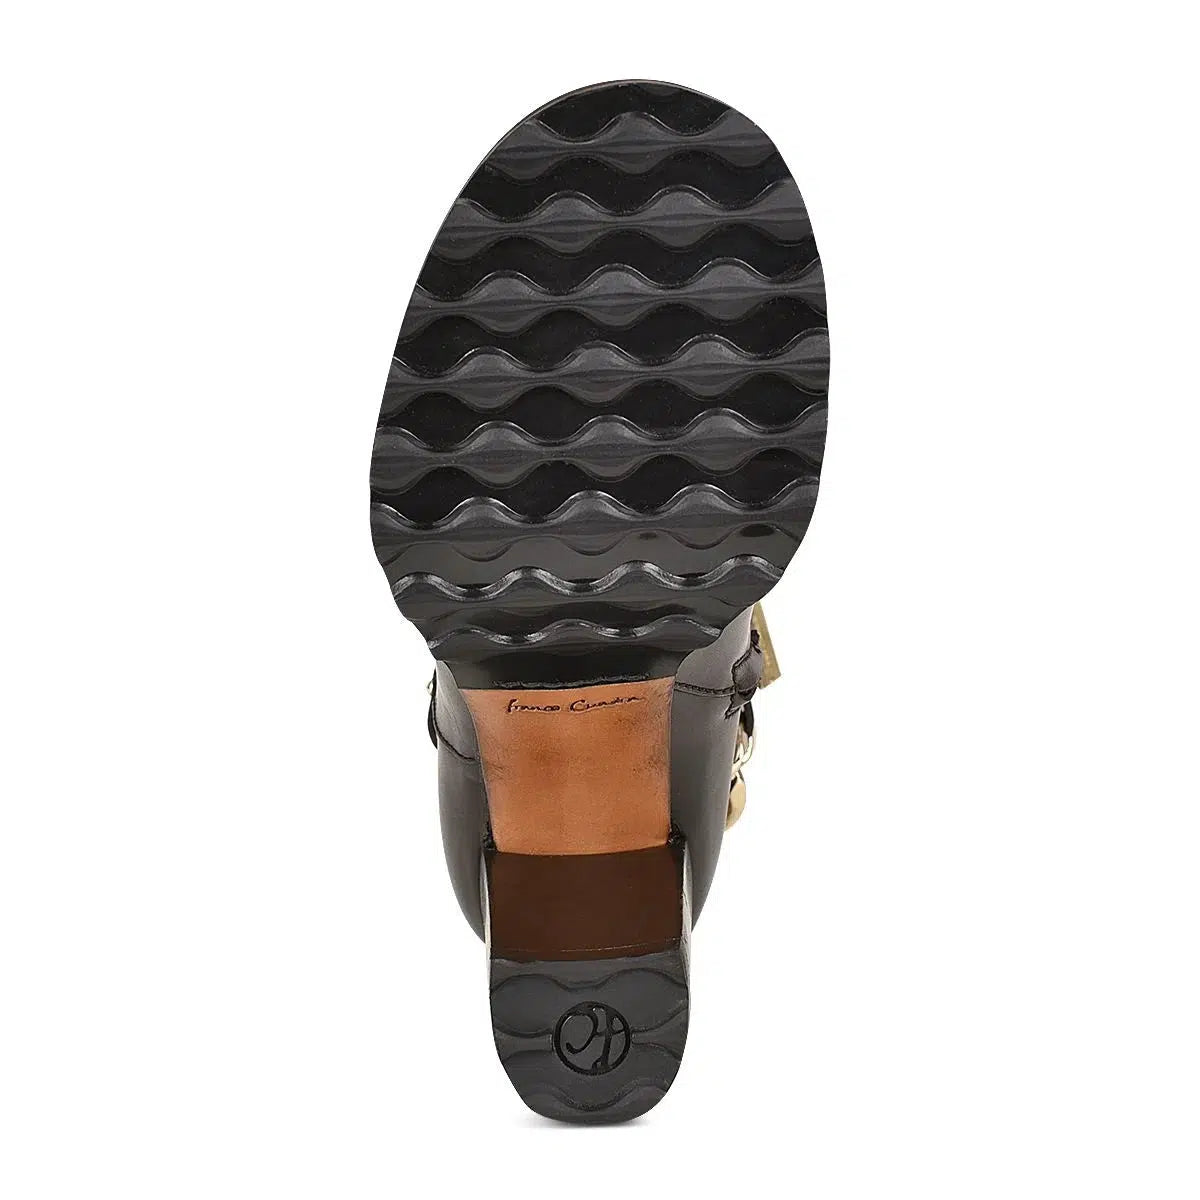 30CTSTS - Cuadra chocolate casual fashion leather plain high heel ankle boots for women-FRANCO CUADRA-Kuet-Cuadra-Boots